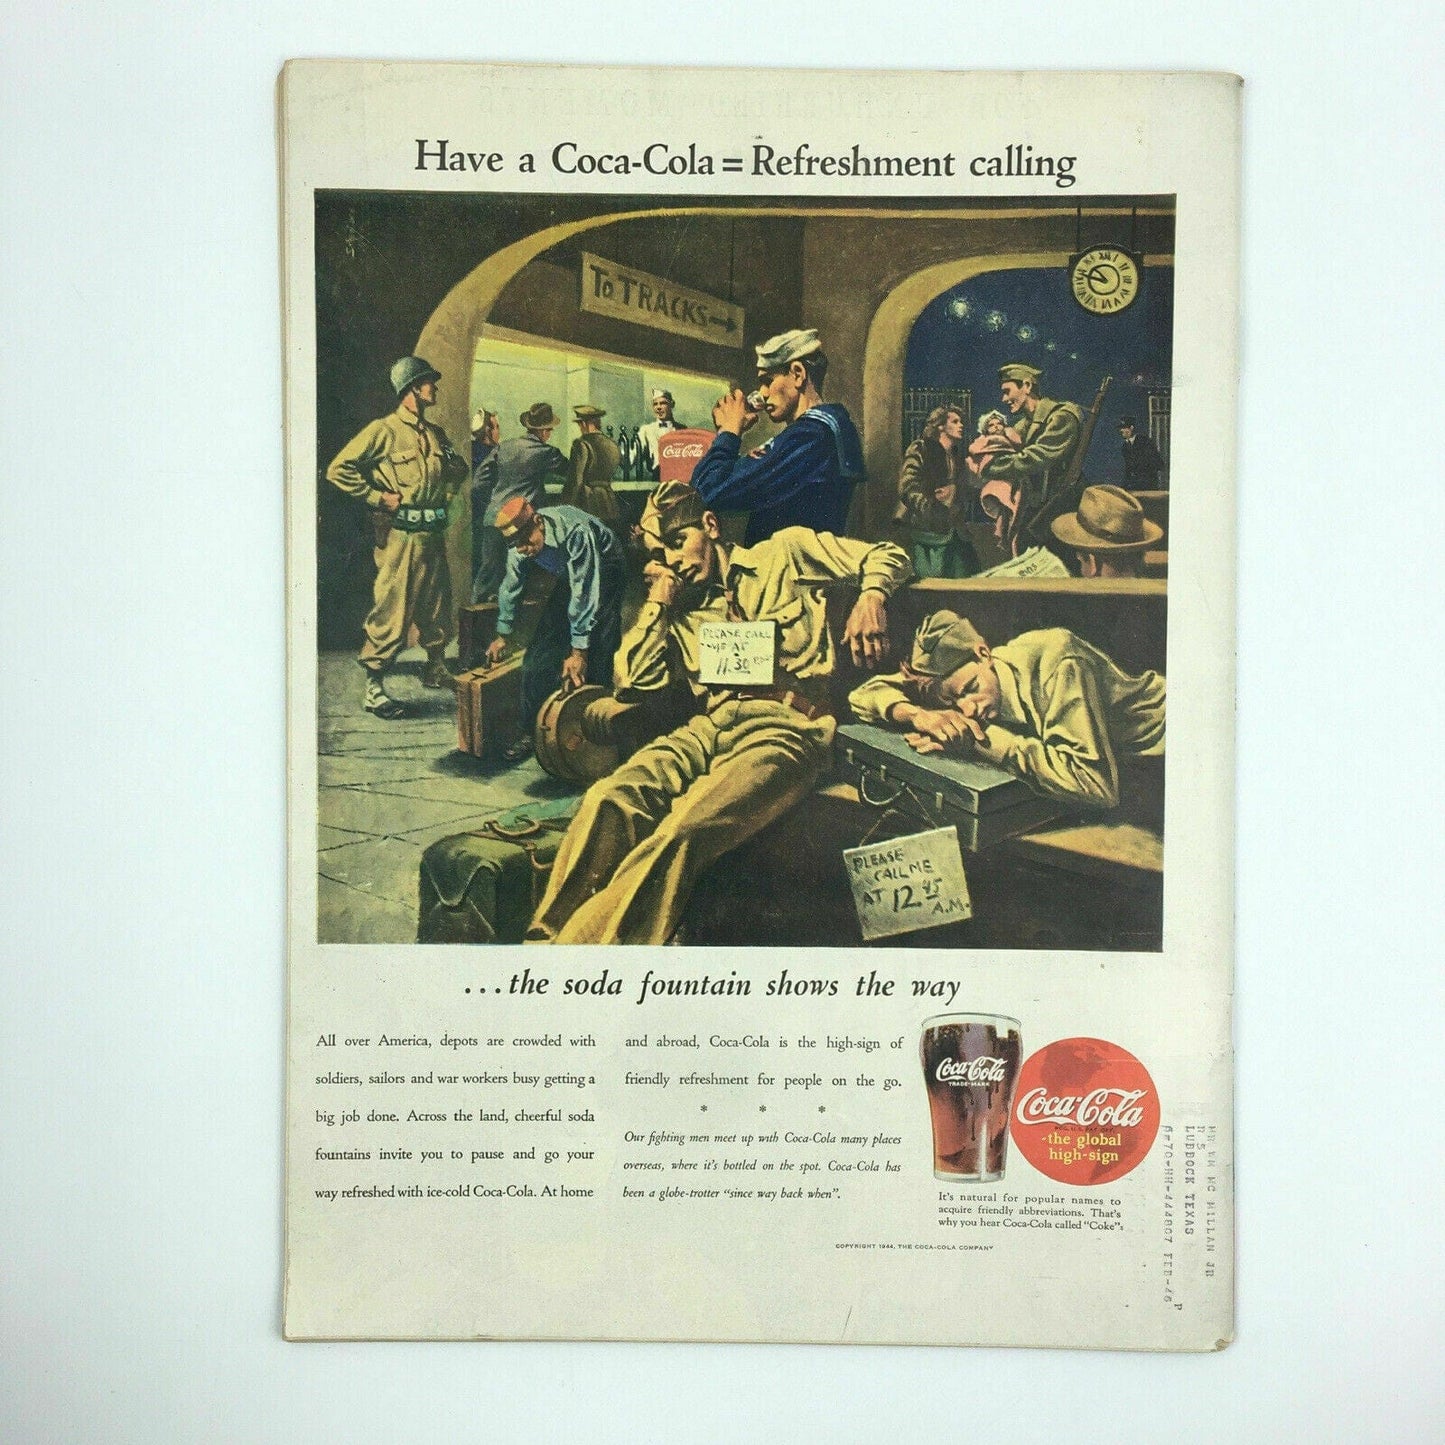 Rare & Classic Thanksgiving Issue Vintage Life Magazine - November 20, 1944